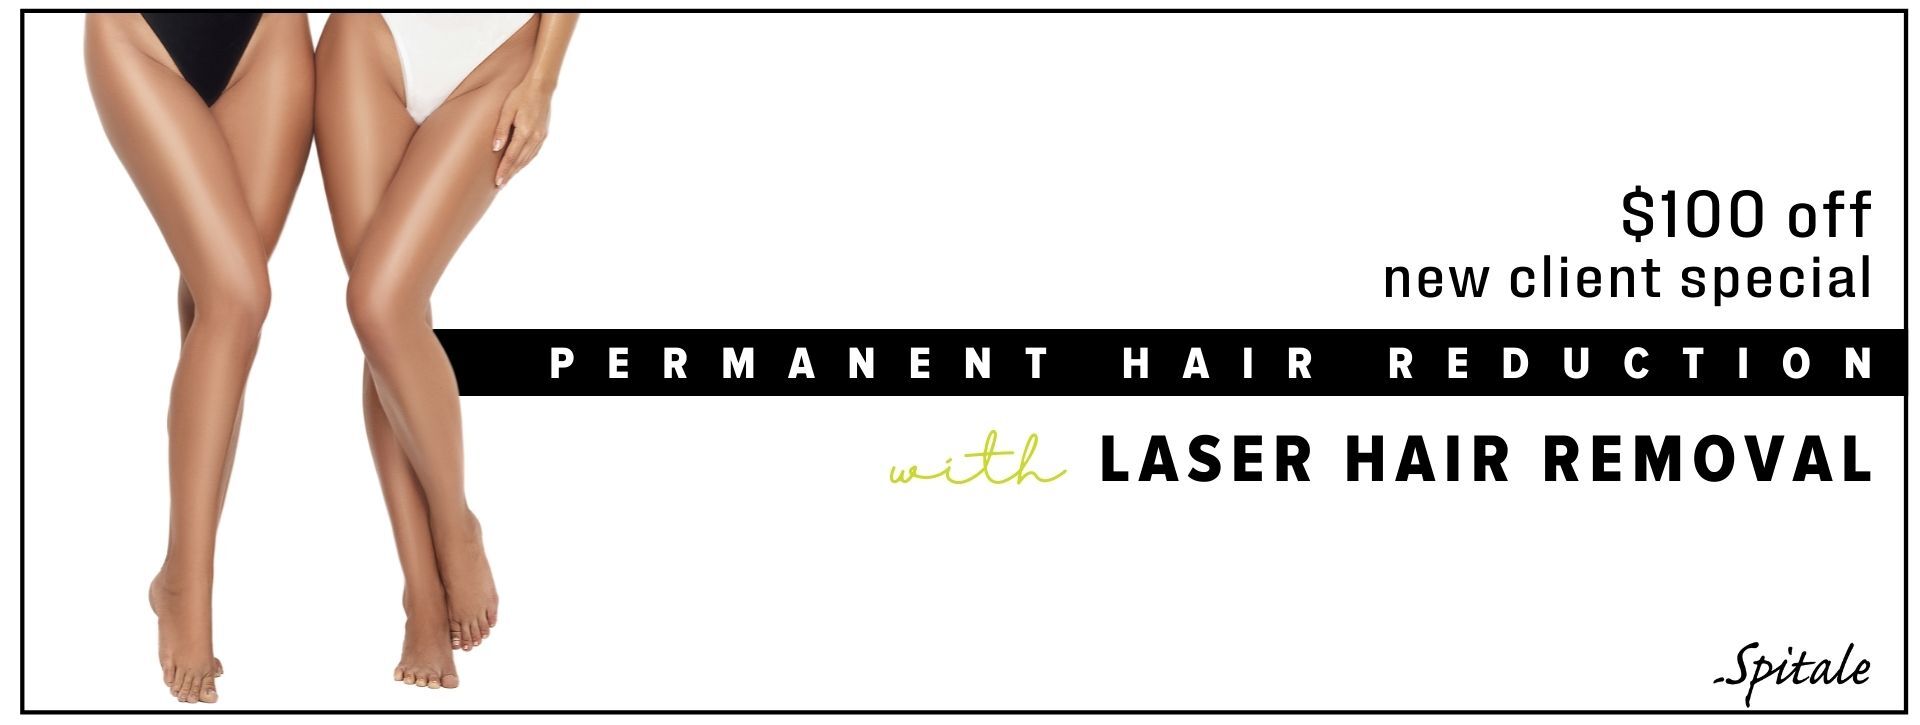 Laser Hair Removal Rochester NY Spitale Laser Spa Salon